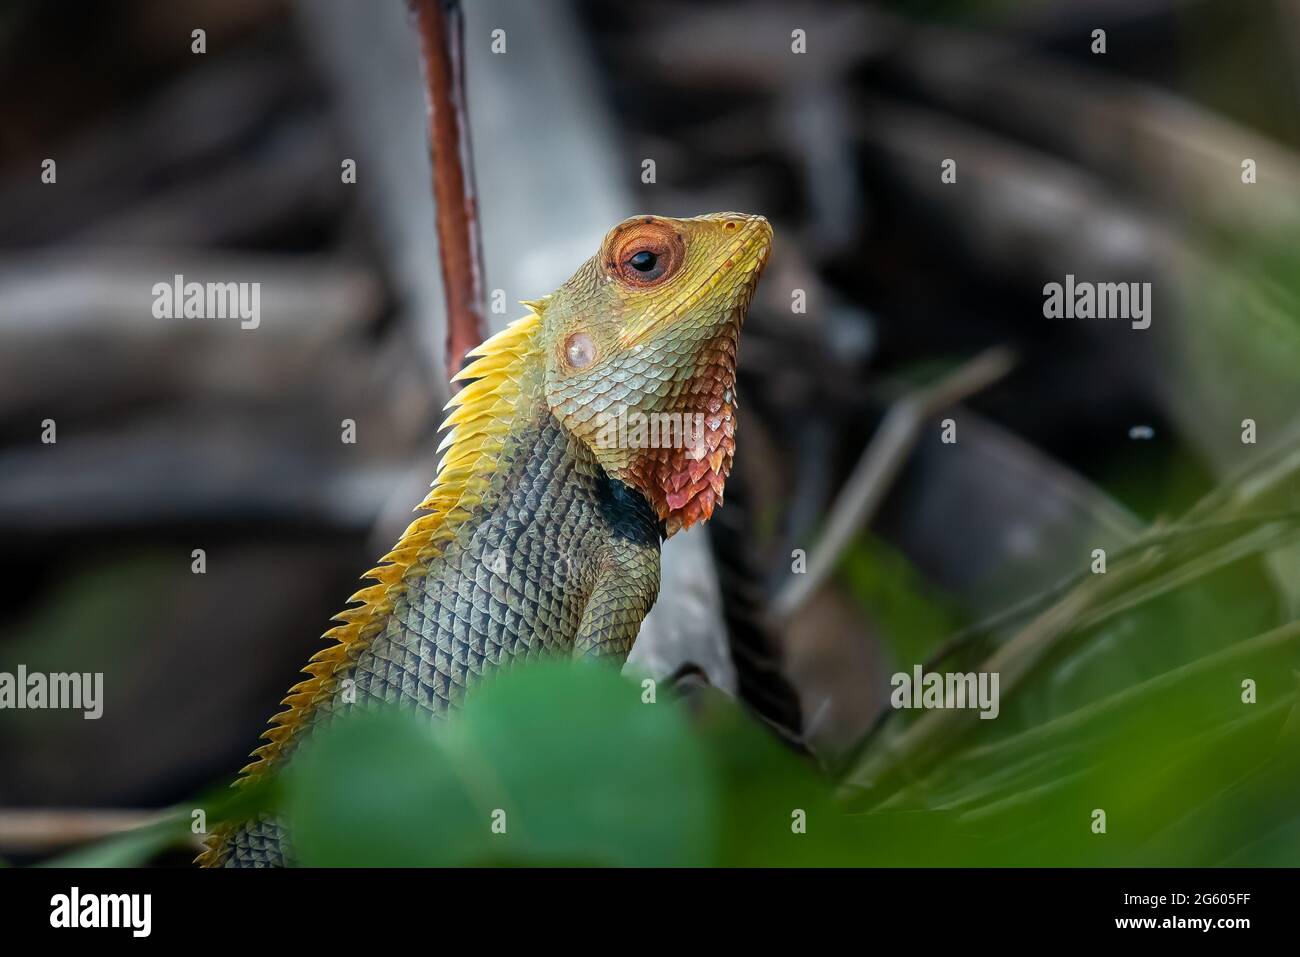 A curious Indian Garden Lizard, peering over the foliage Stock Photo